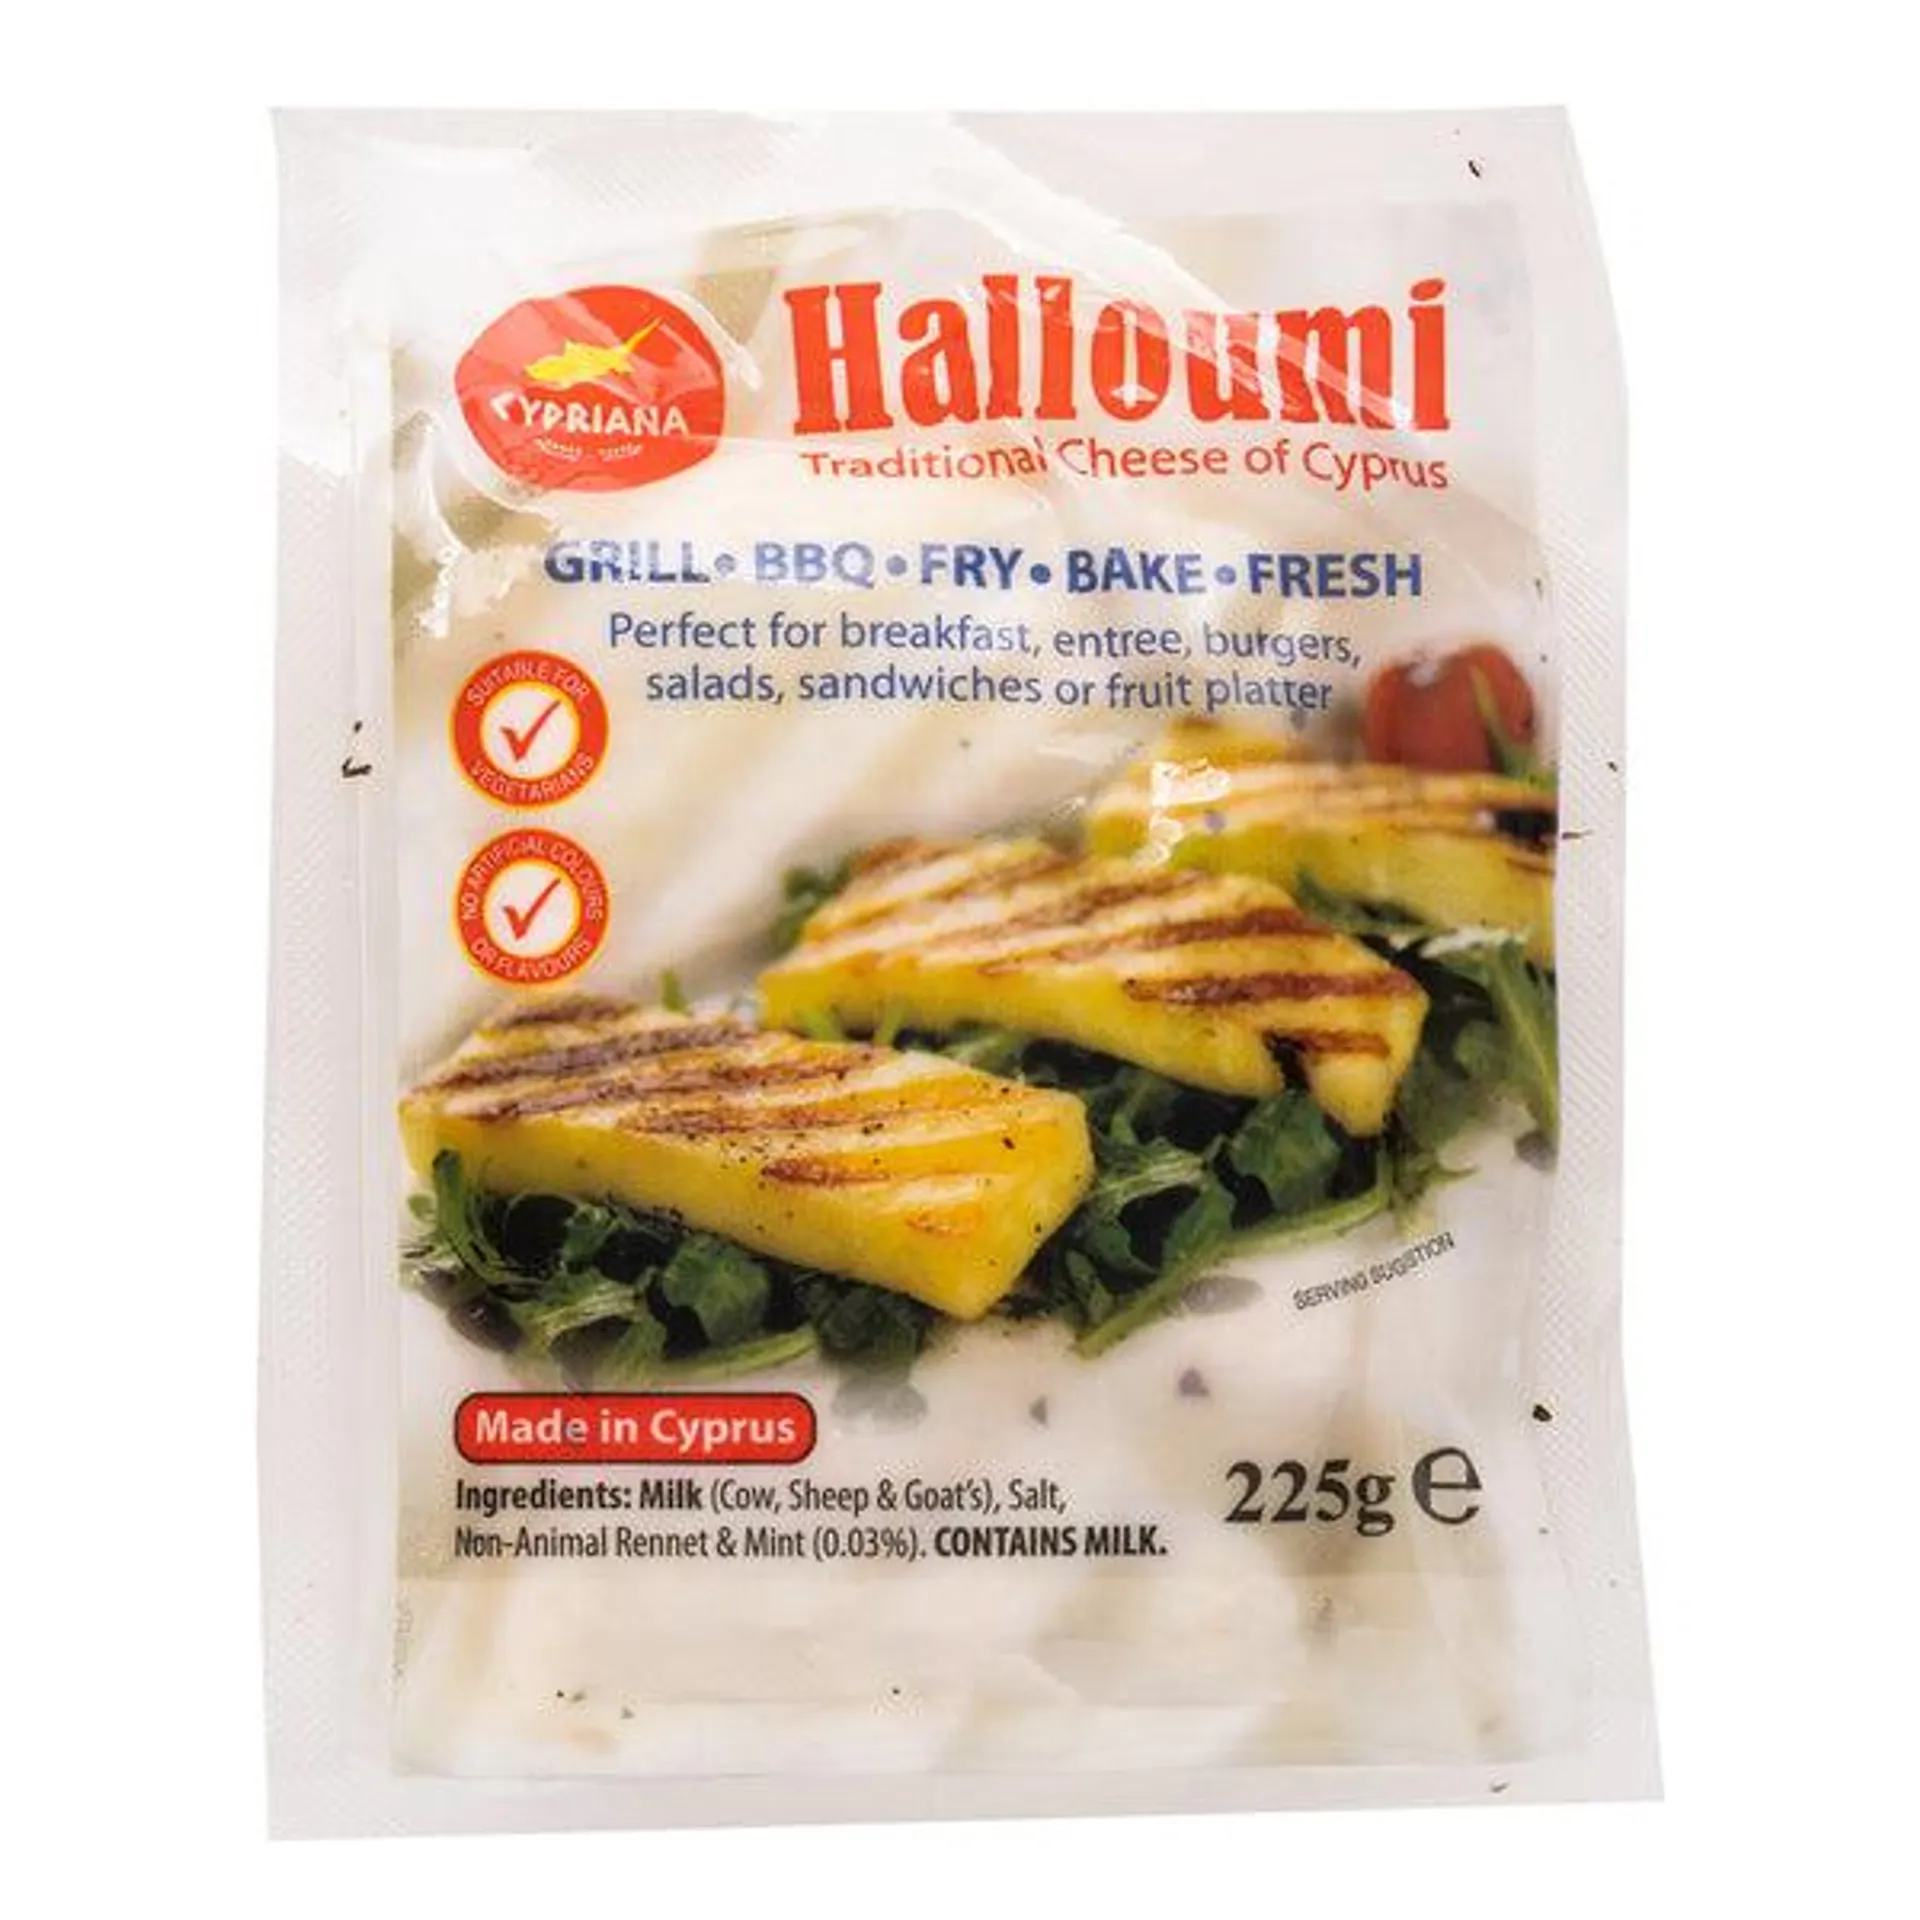 Cypriana Halloumi Cheese 225g